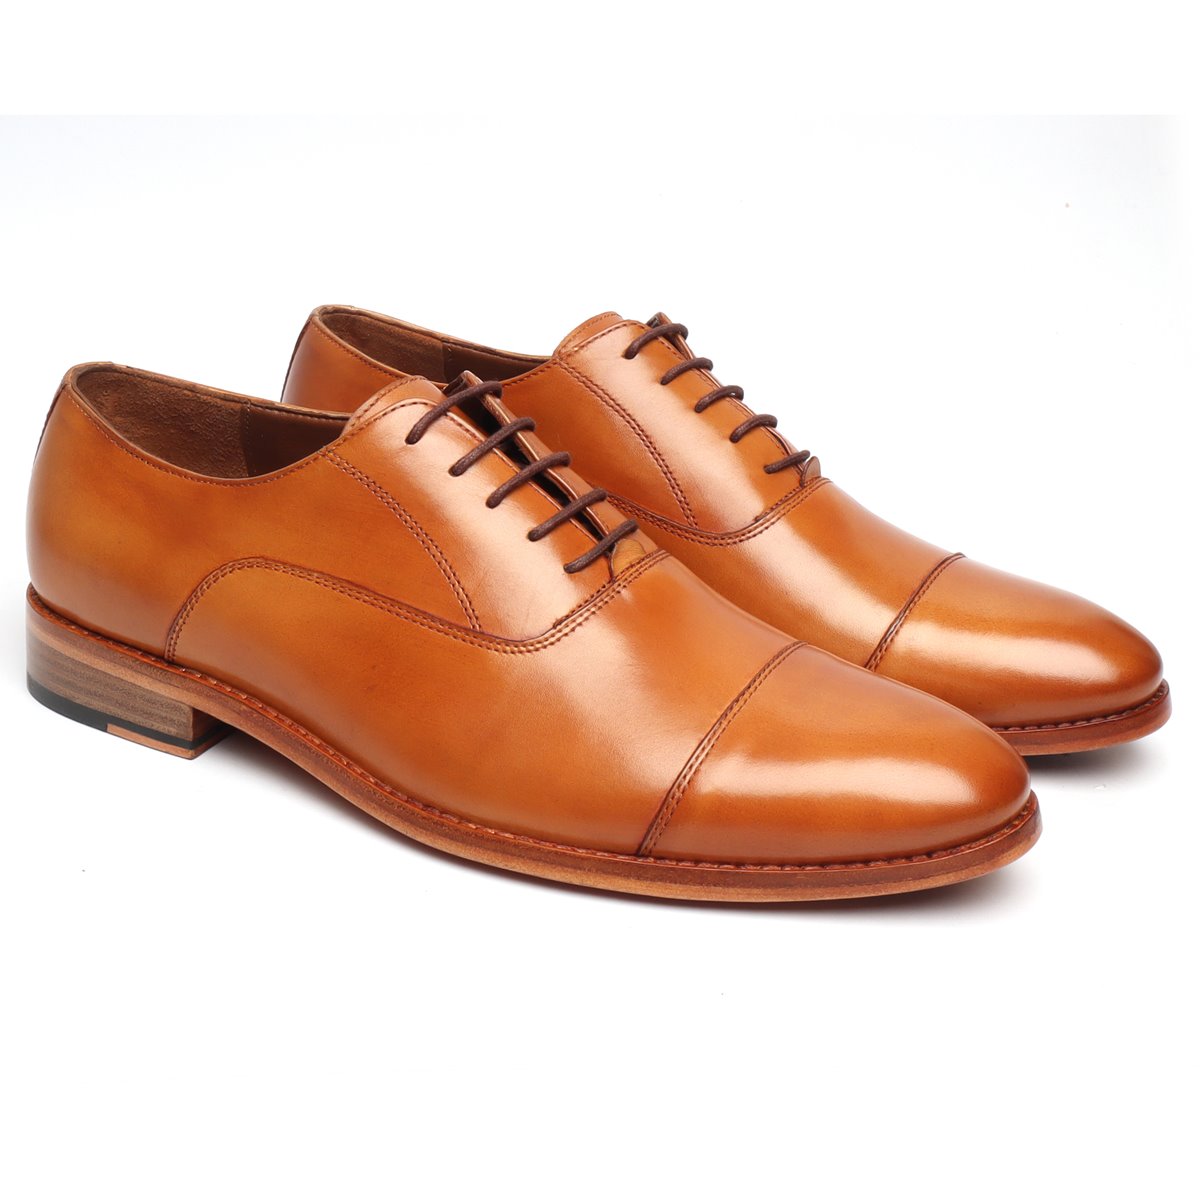 Orange Tan Cap Toe Sleek Look Leather Shoes with Leather Sole By Brune & Bareskin